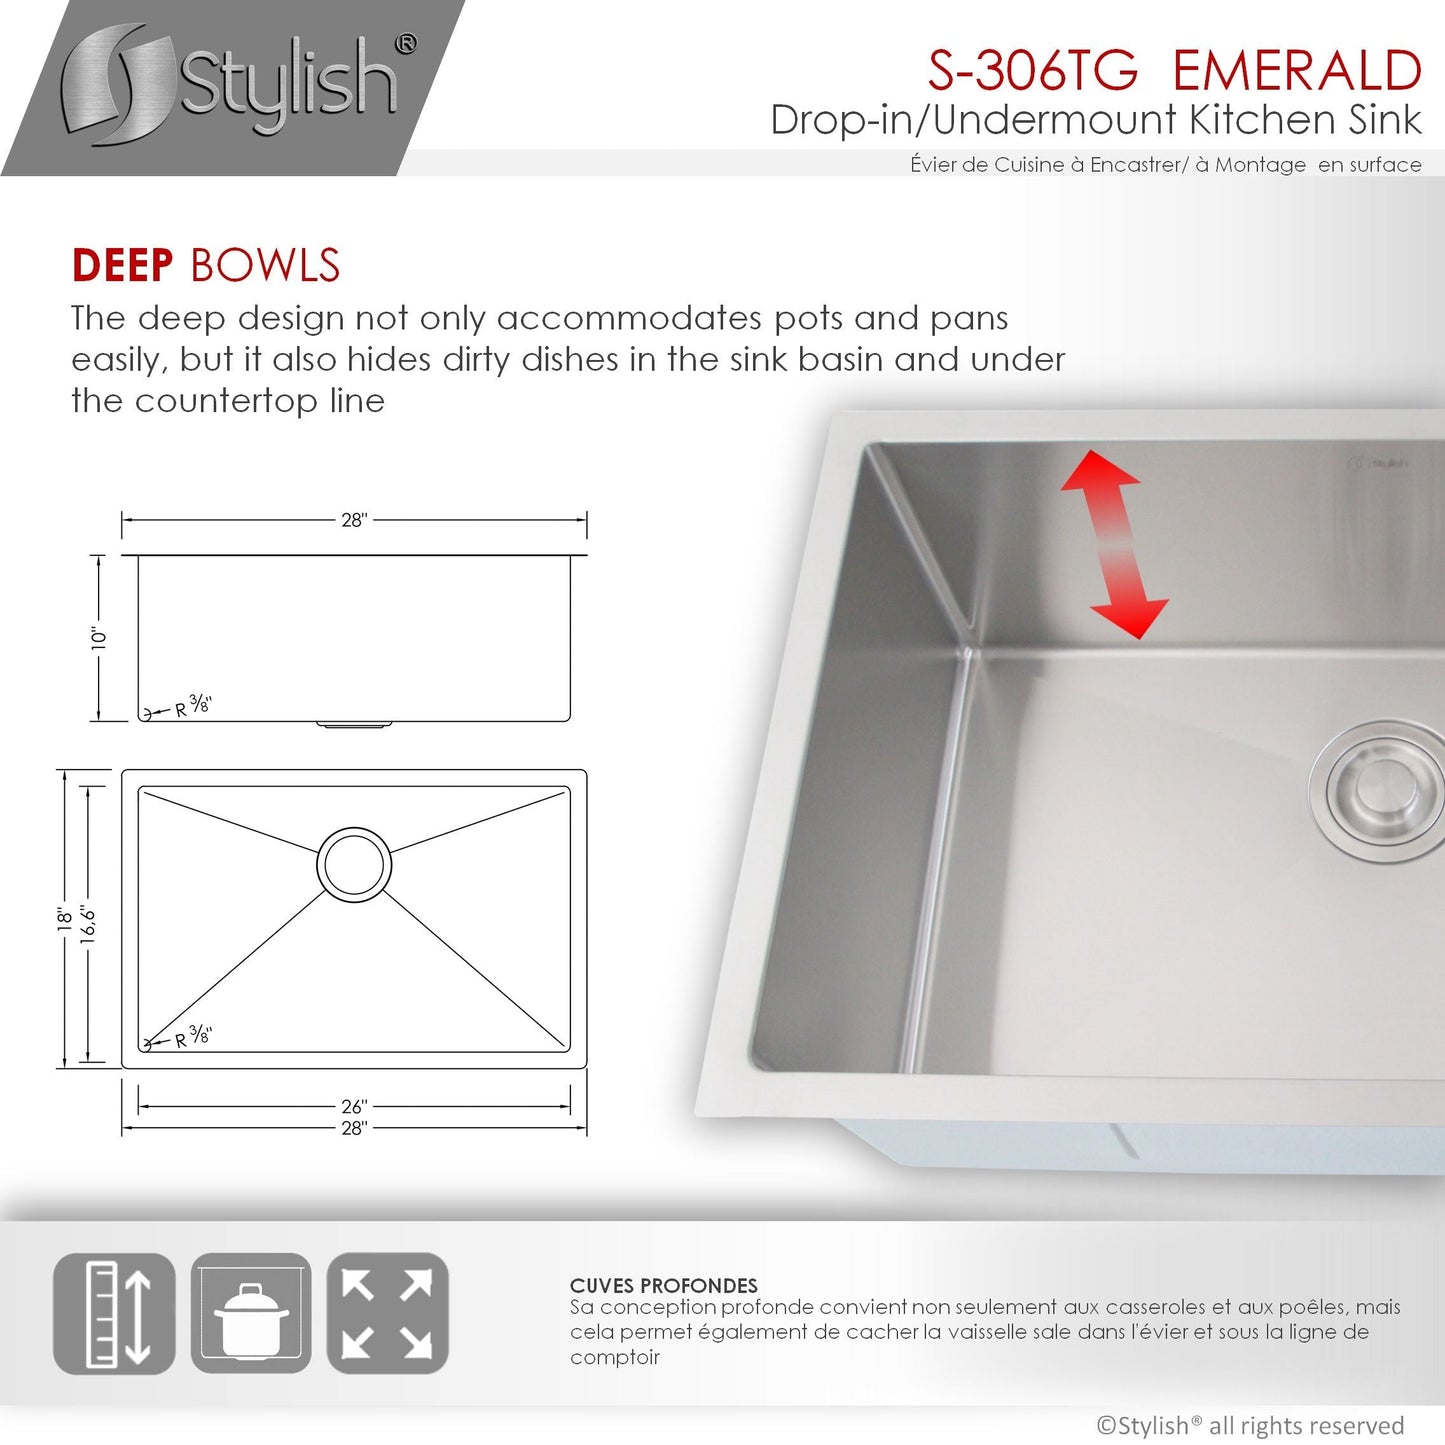 Stylish Emerald 28" x 18" Single Bowl Drop-in/Undermount Stainless Steel Kitchen Sink S-306TG